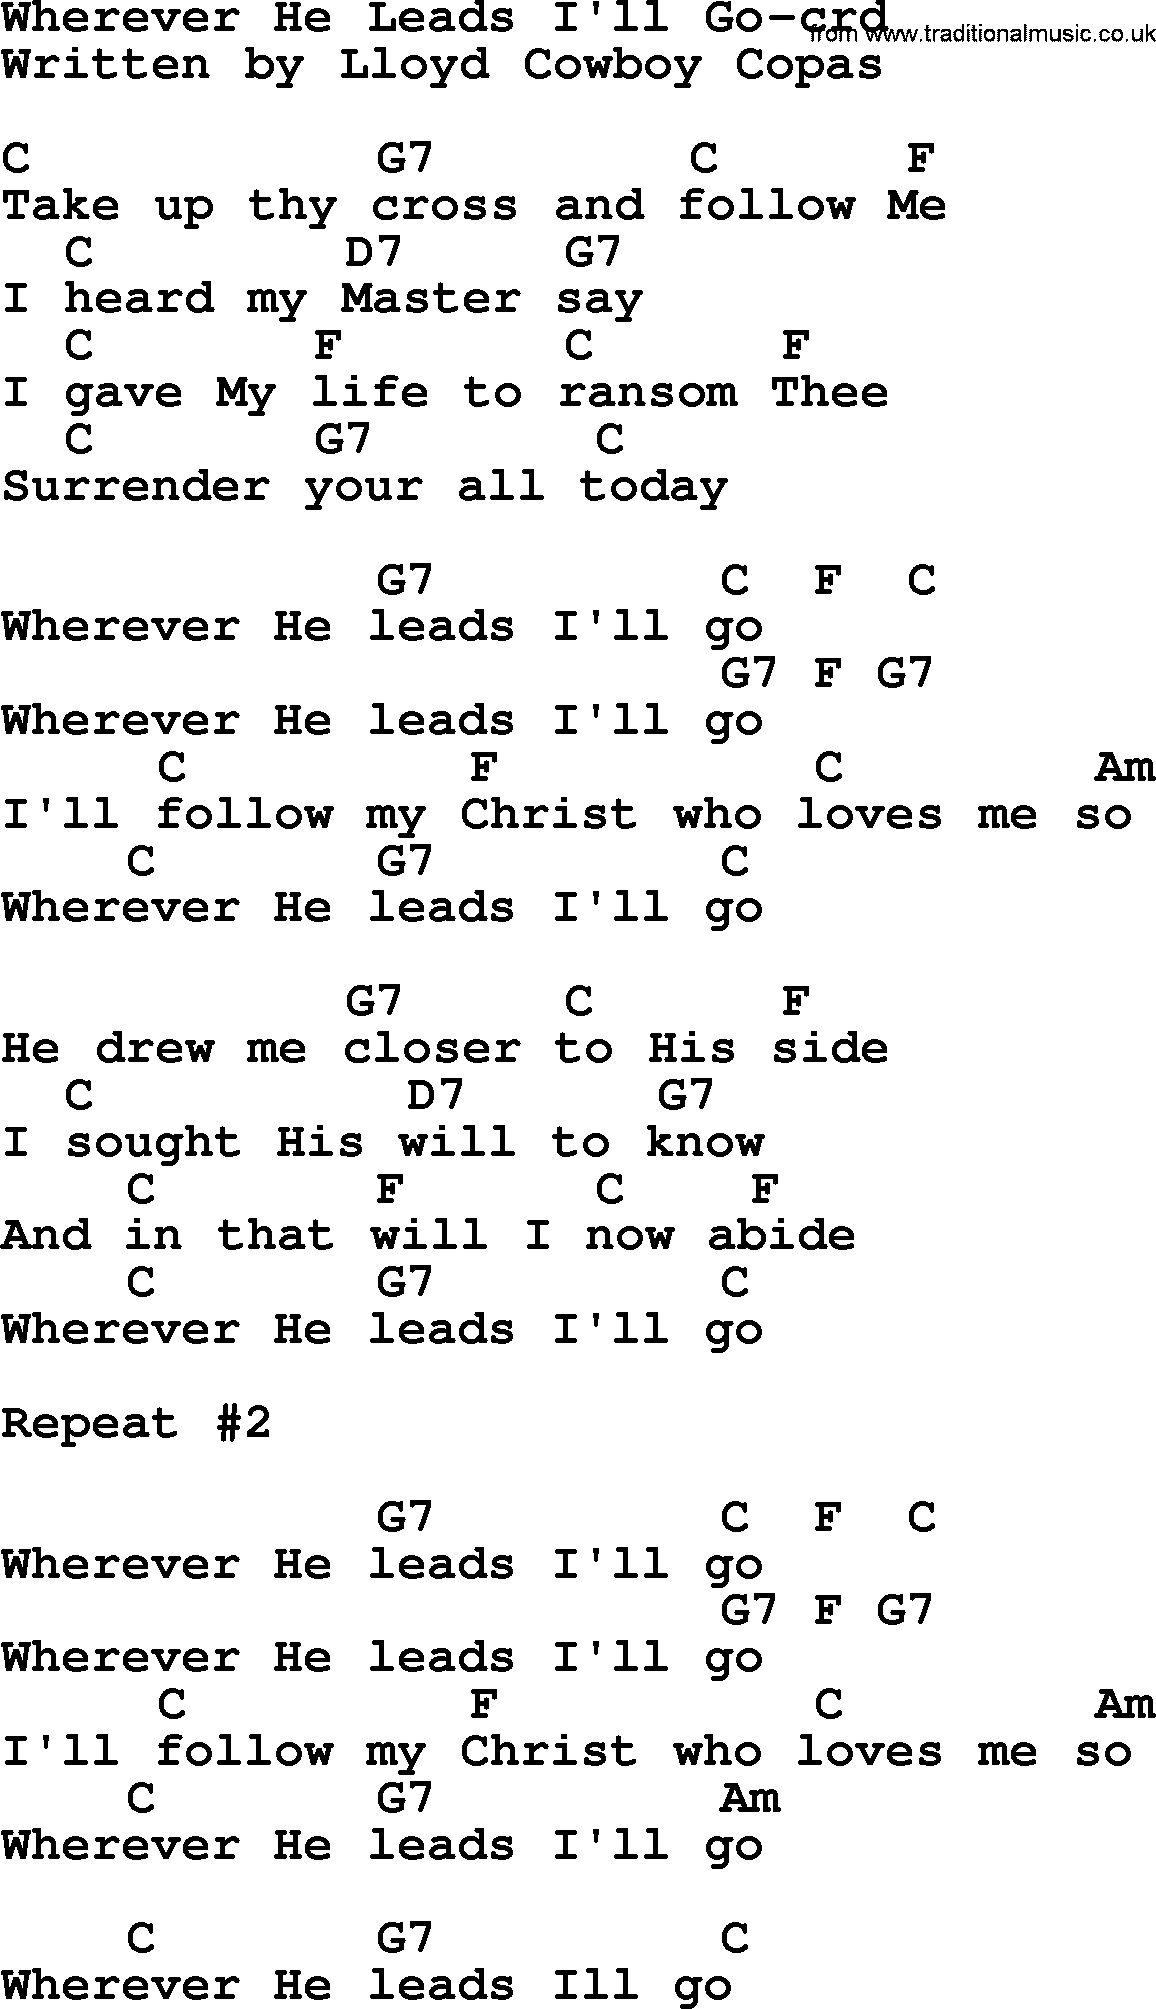 Top 500 Hymn: Wherever He Leads I'll Go - chords and PDF